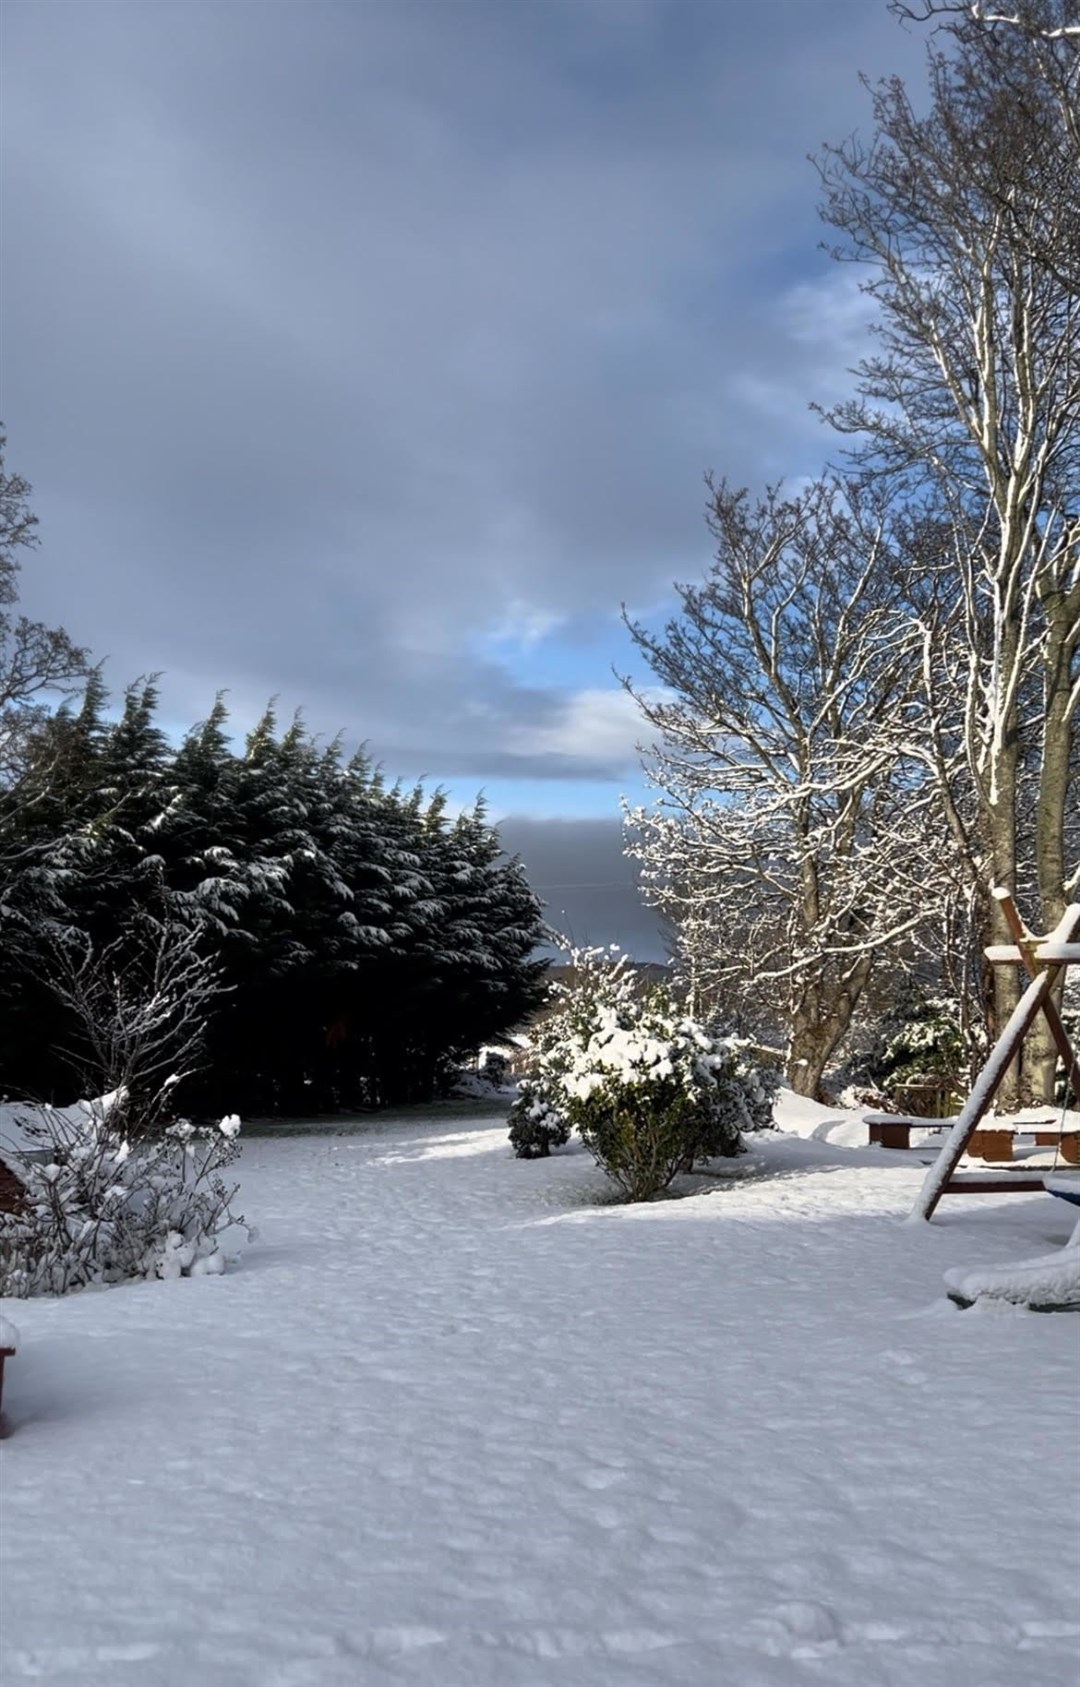 Imran Rafiq's picture of snow in Brookside,Inverness.